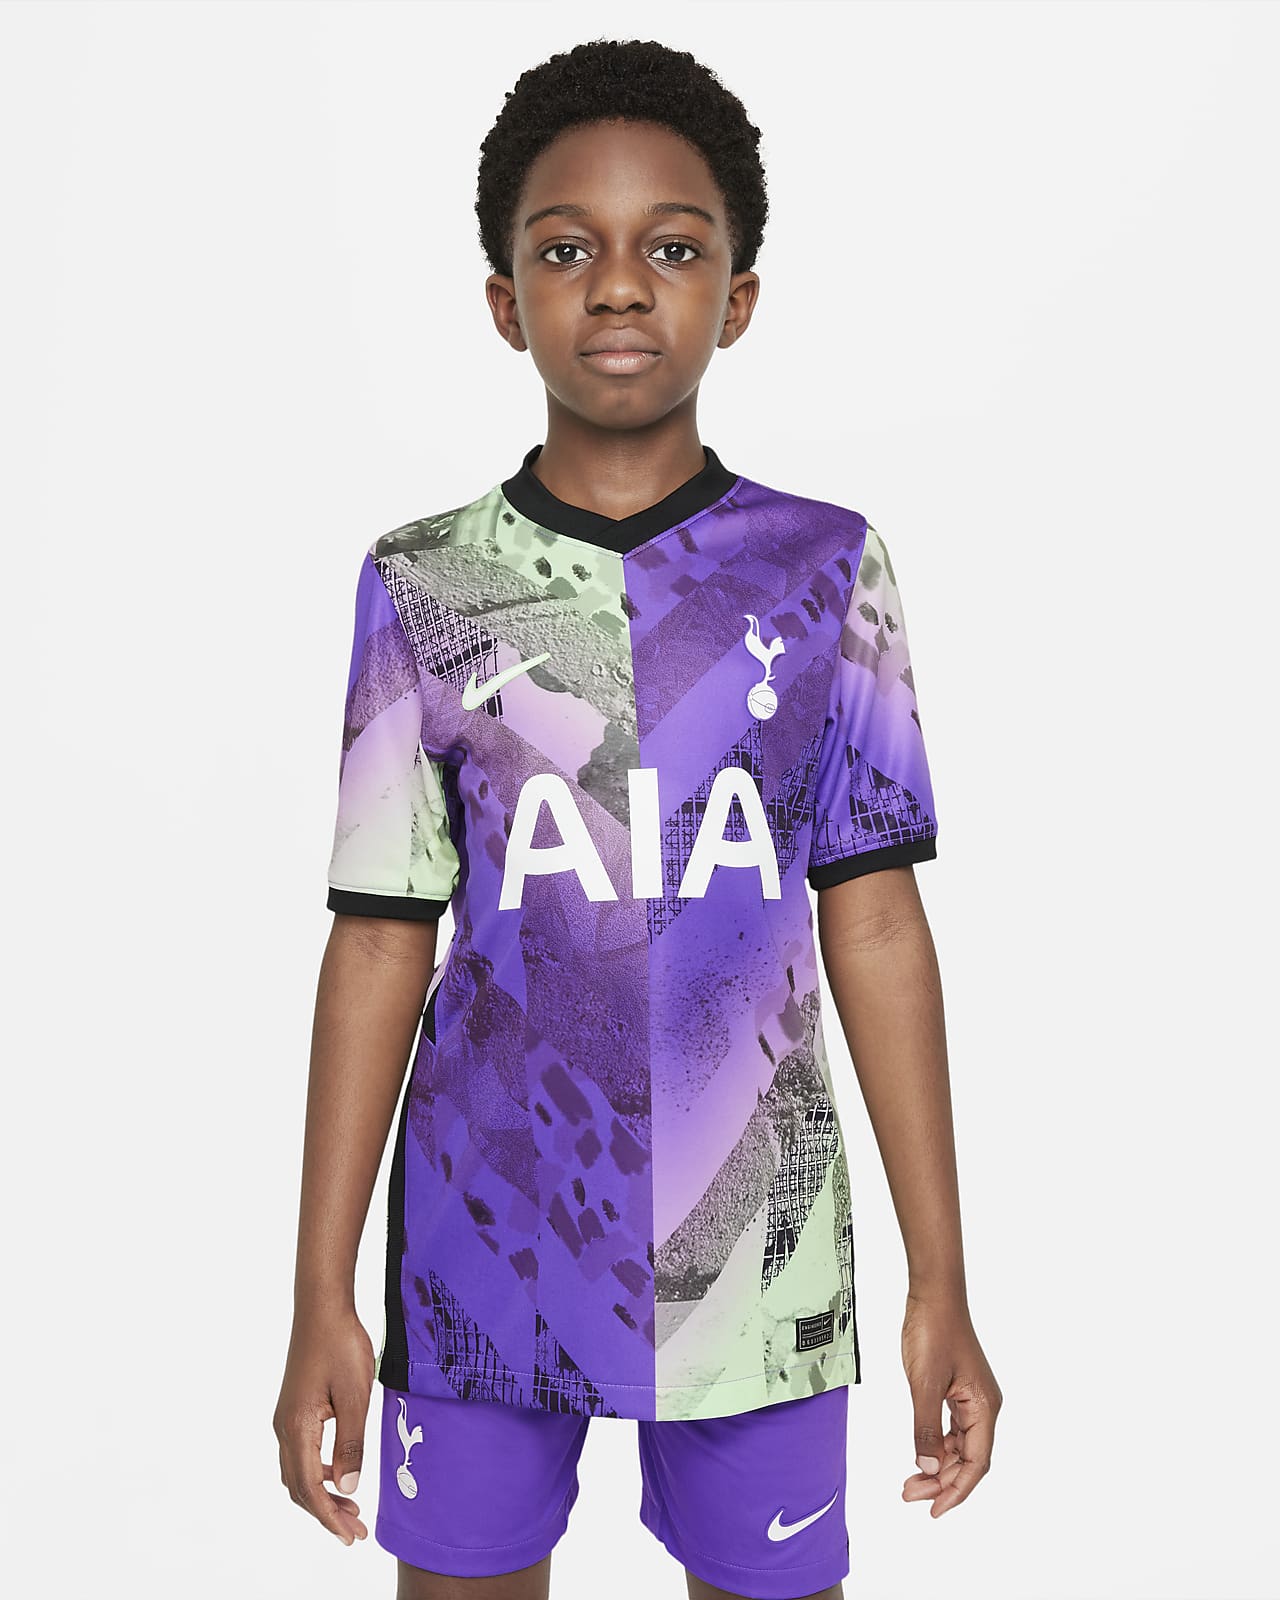 Tottenham Hotspur 2021/22 Stadium Third Older Kids' Nike Dri-FIT Football Shirt